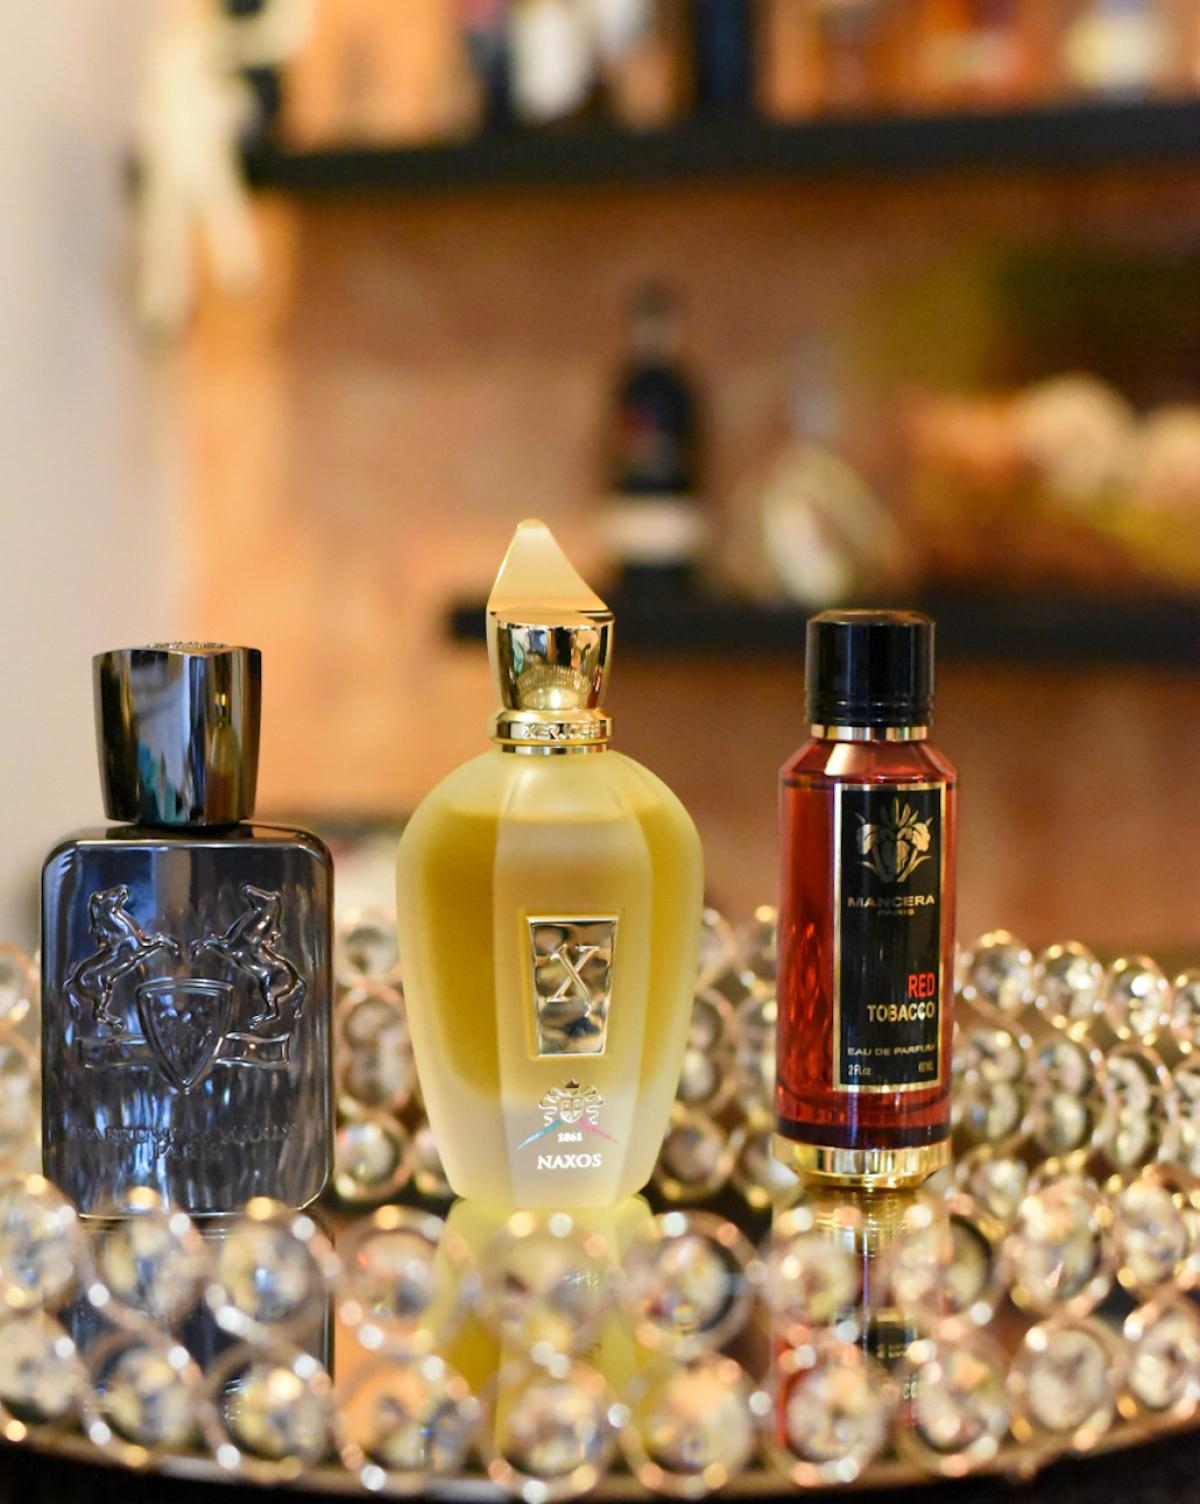 Herod Parfums de Marly cologne - a fragrance for men 2012